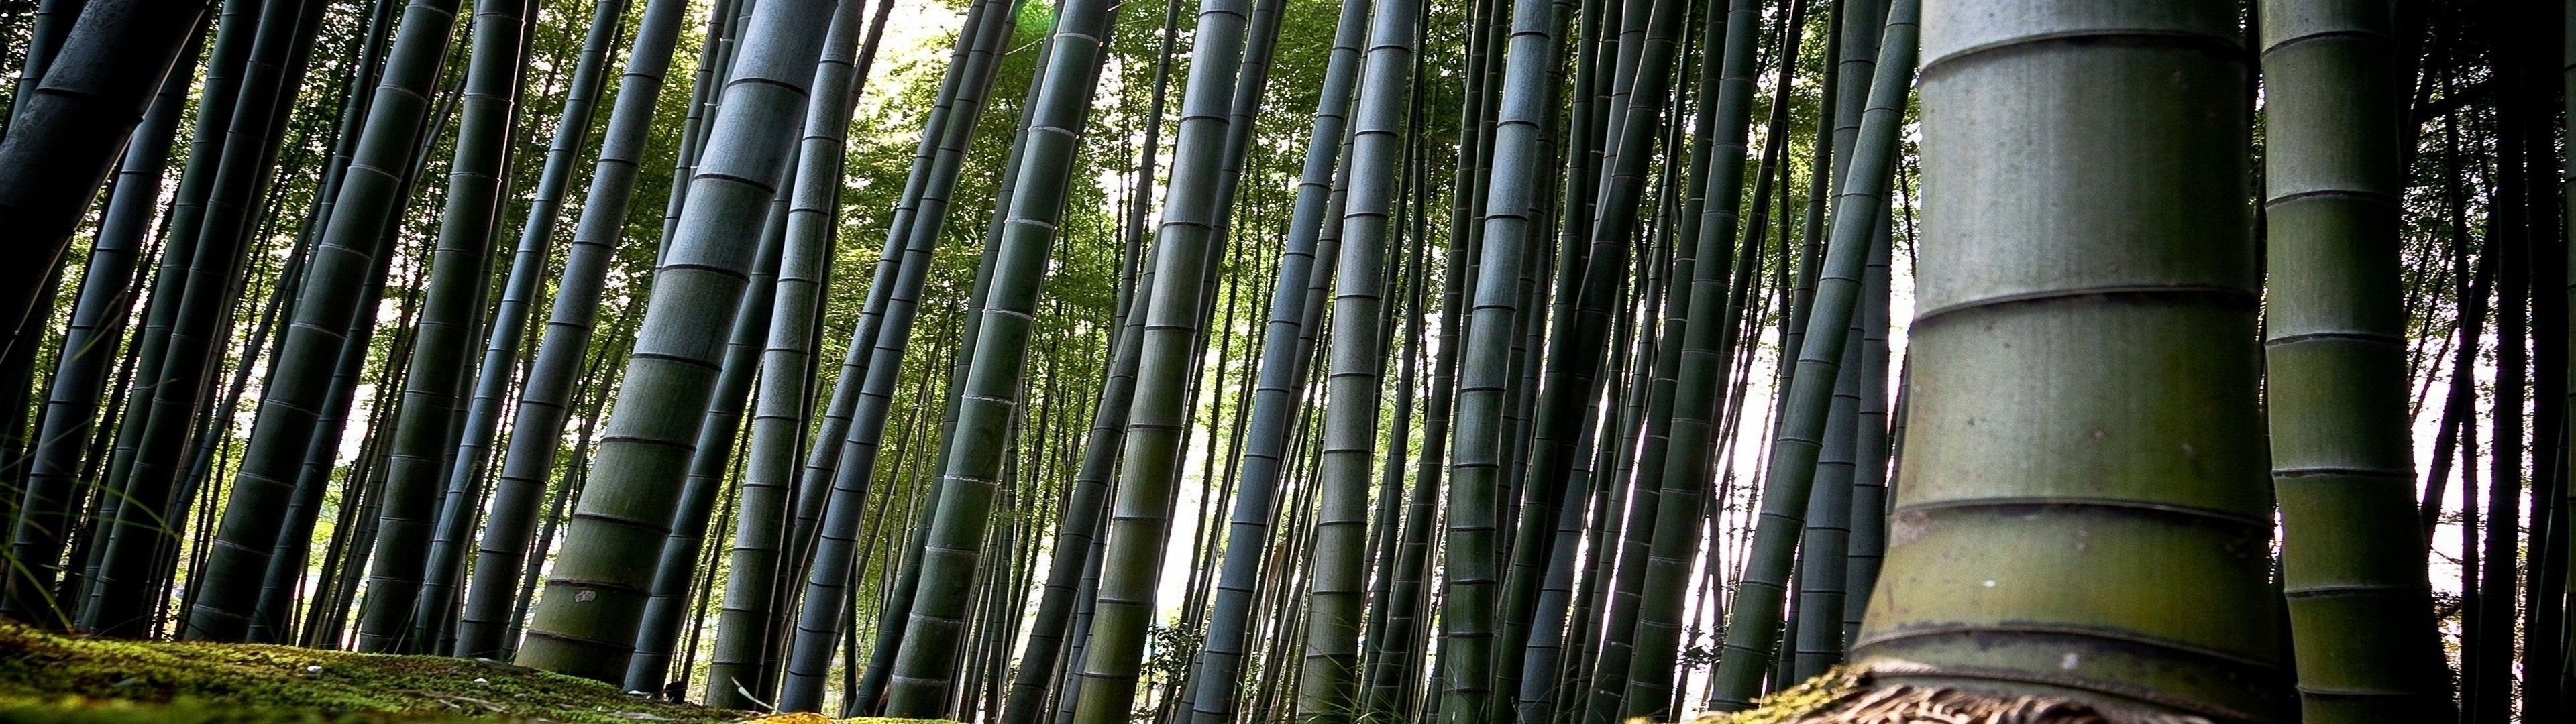 Bamboo dual screen wallpapers, Nature's beauty, Tranquil forest, Dual screen backgrounds, 3840x1080 Dual Screen Desktop